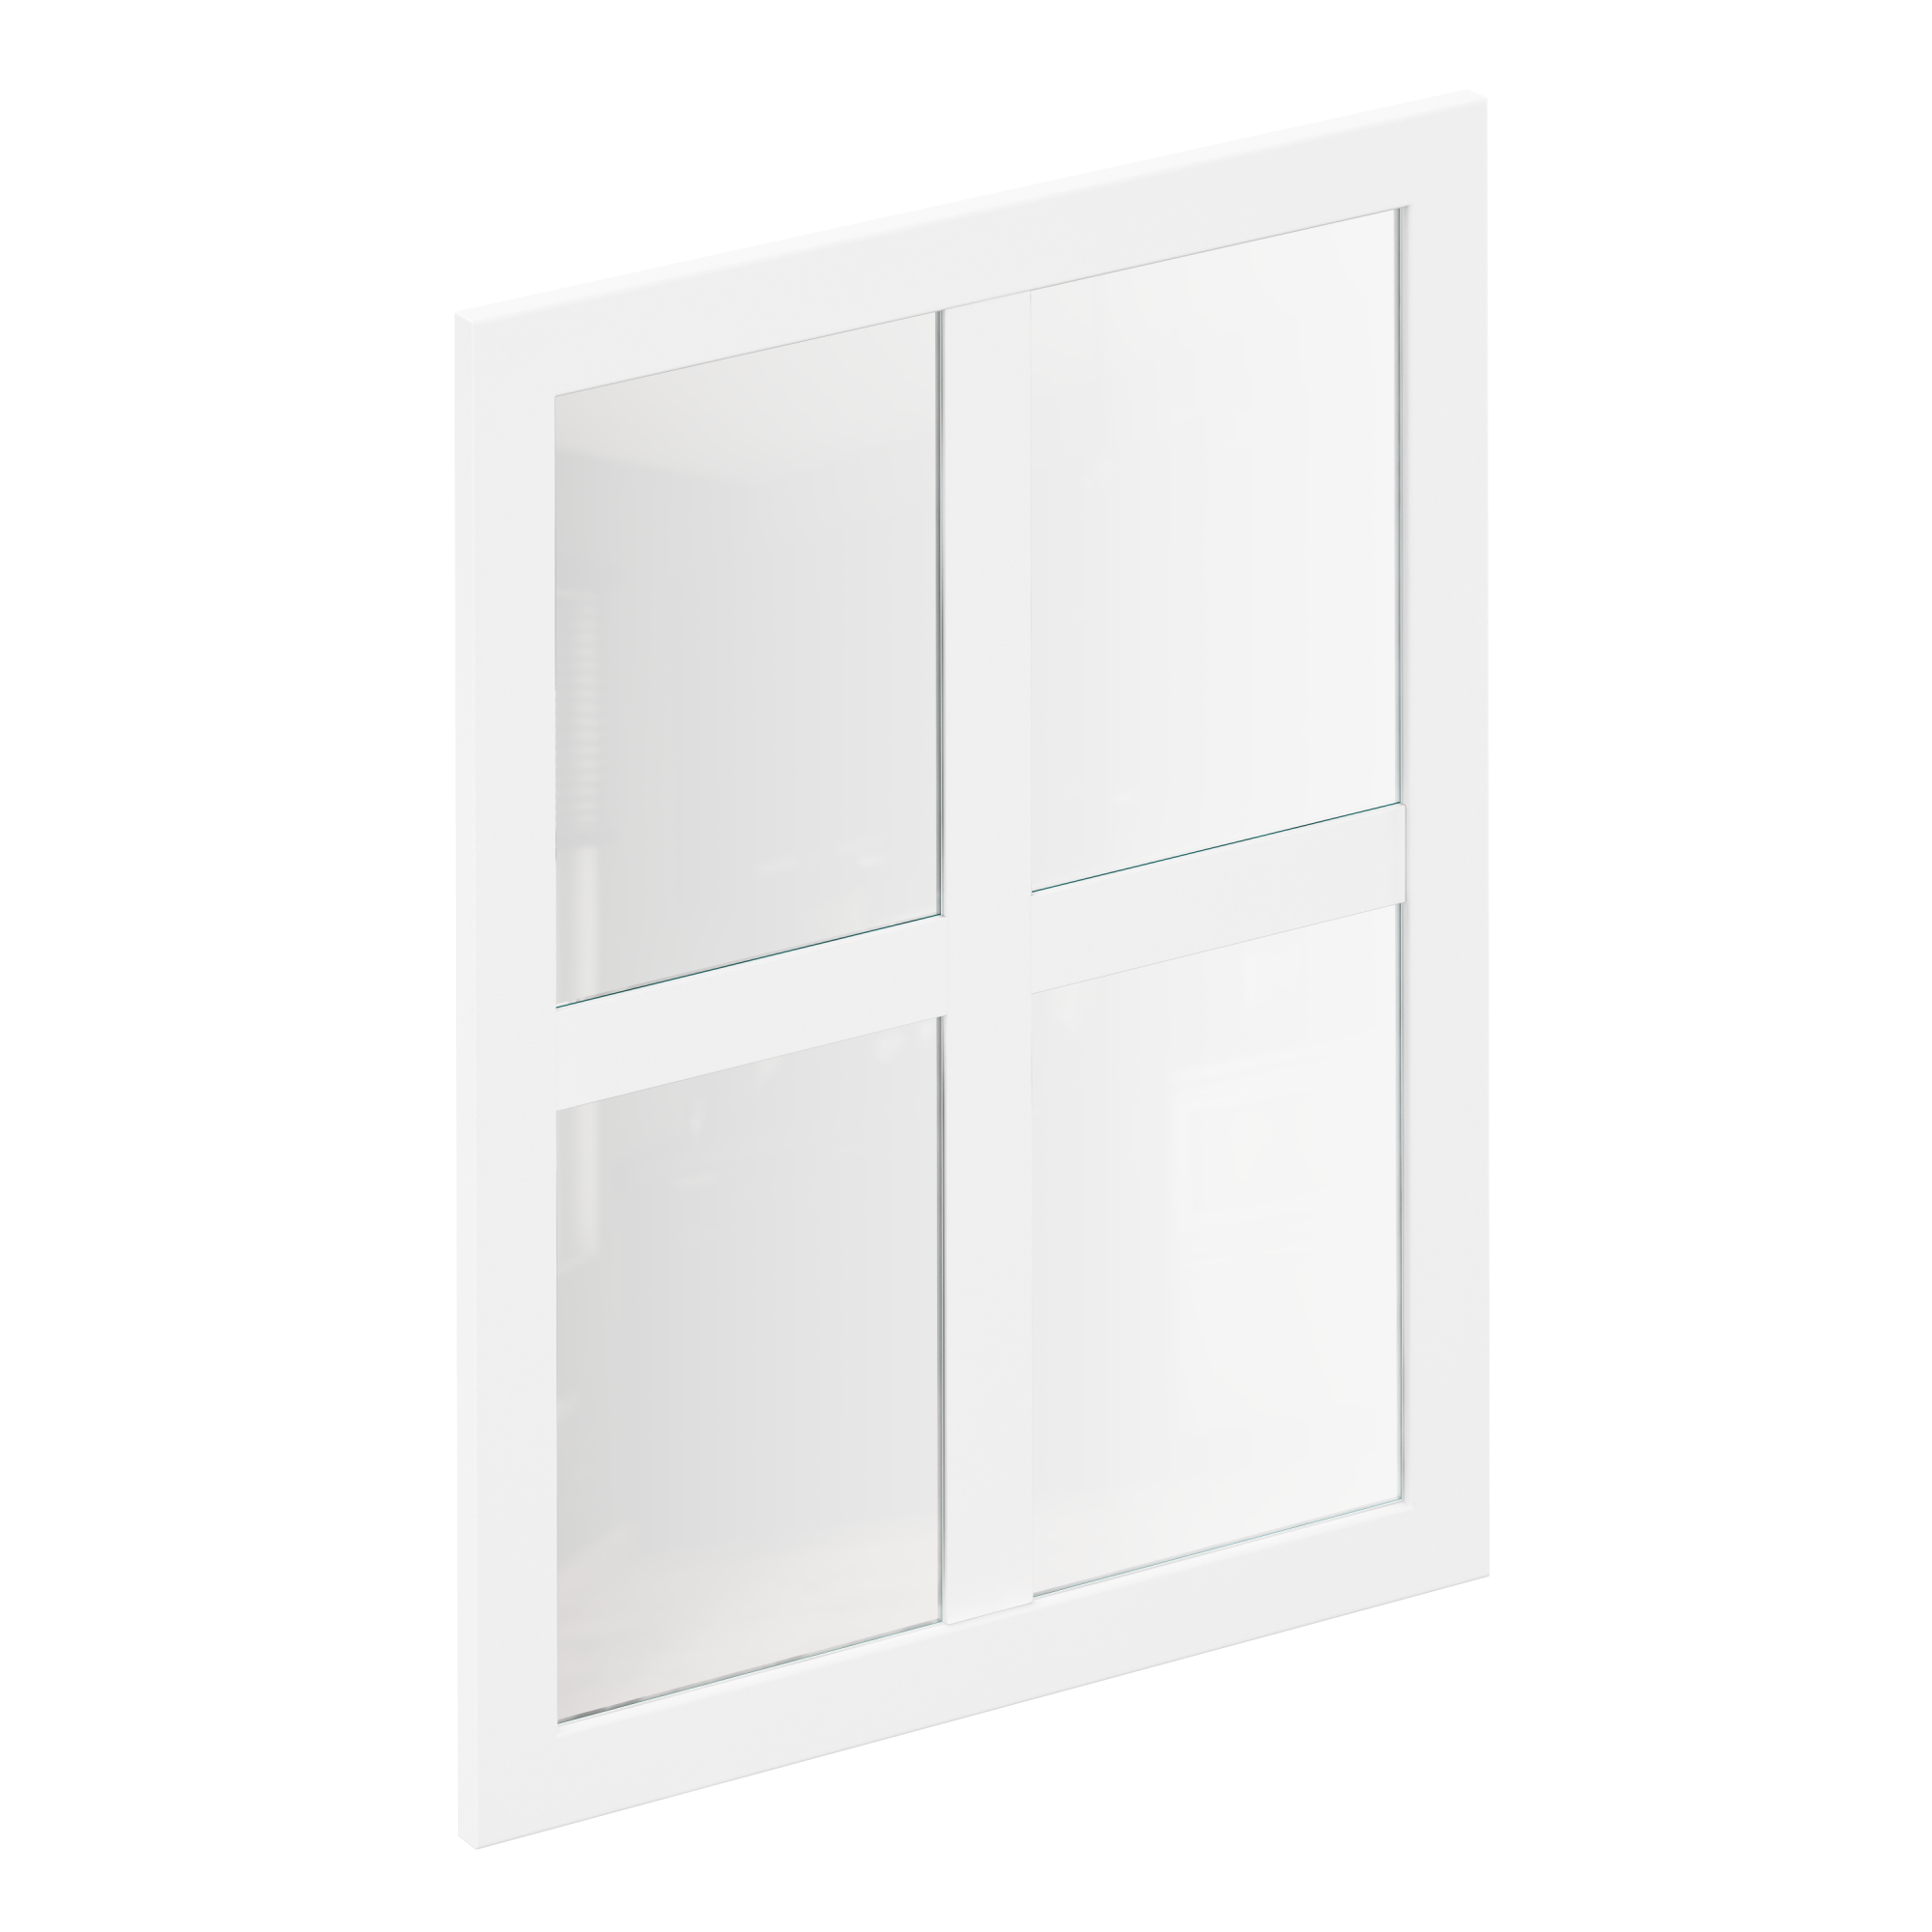 Puerta vitrina para mueble de cocina toscane blanco mate h 76.8 x l 60 cm